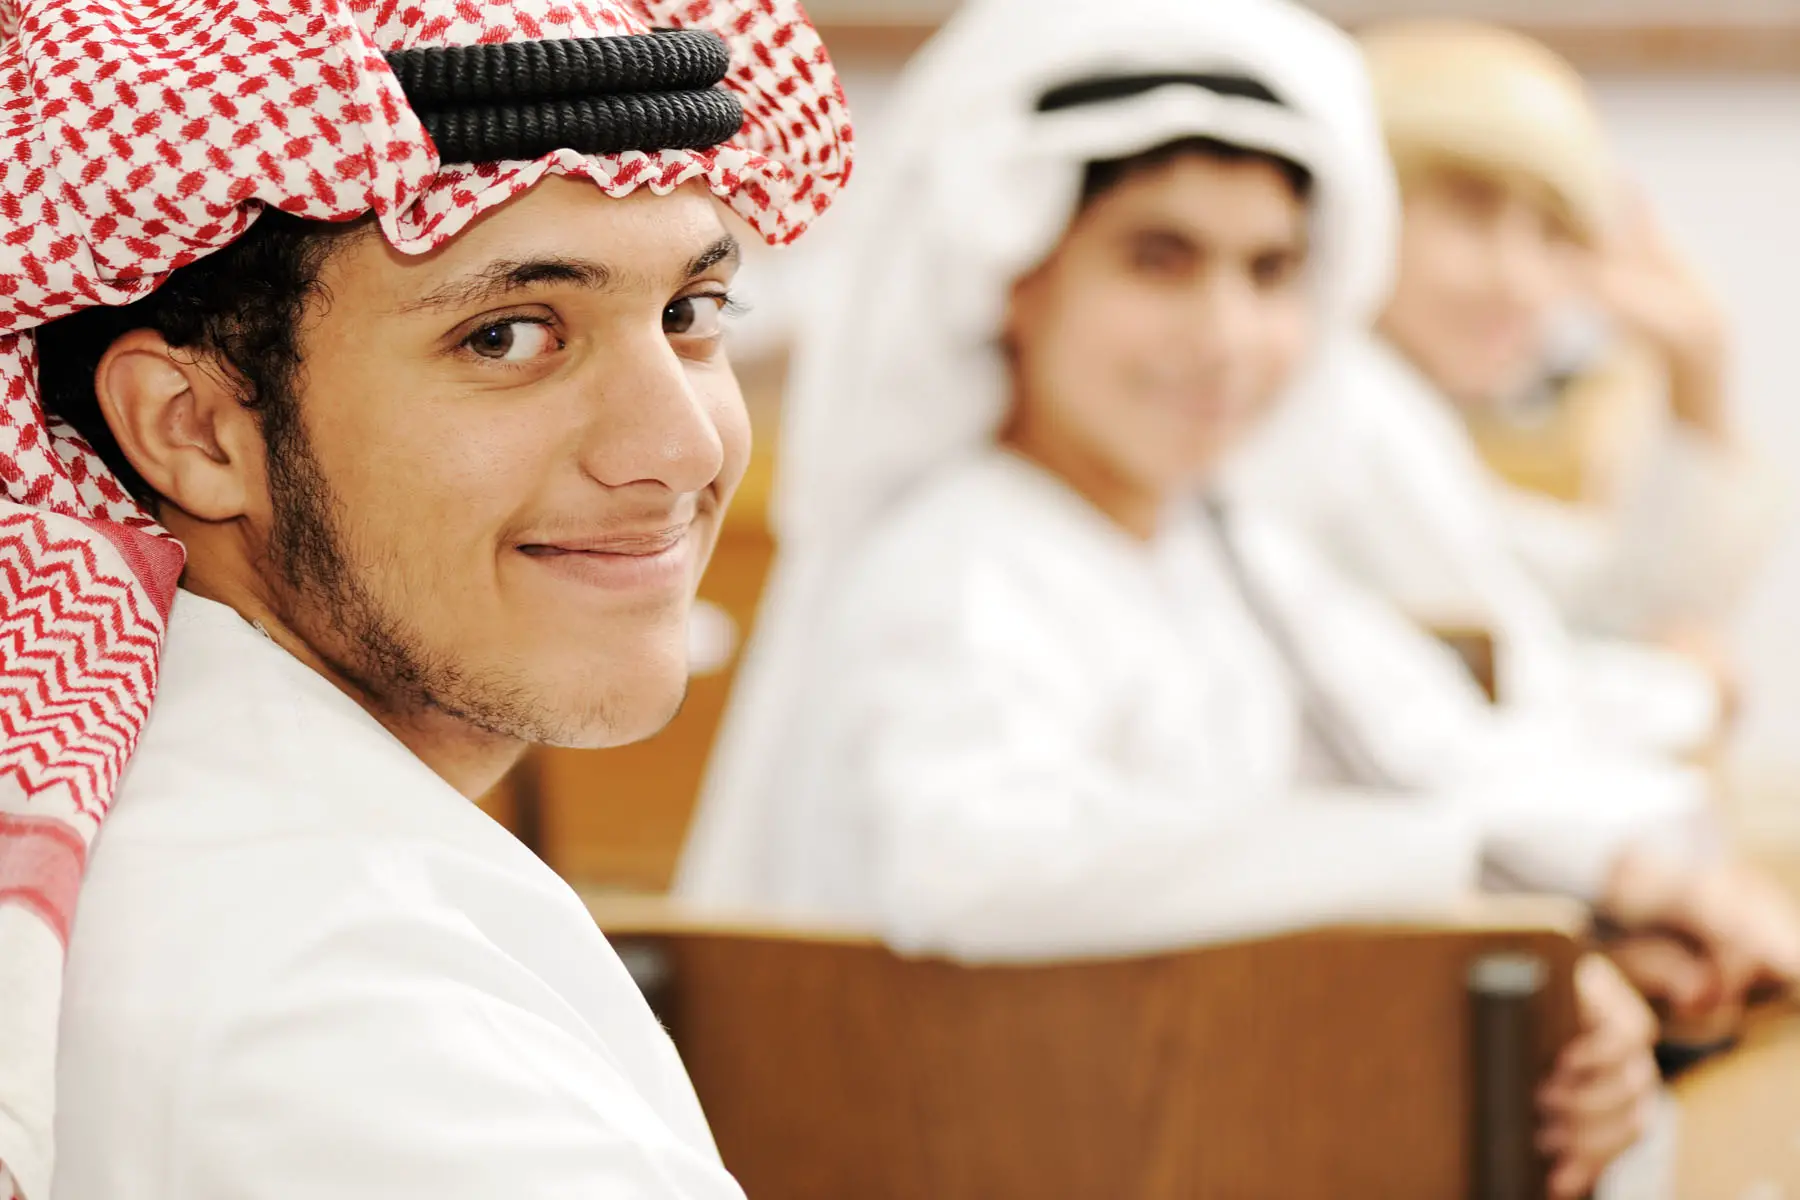 Saudi secondary school pupil